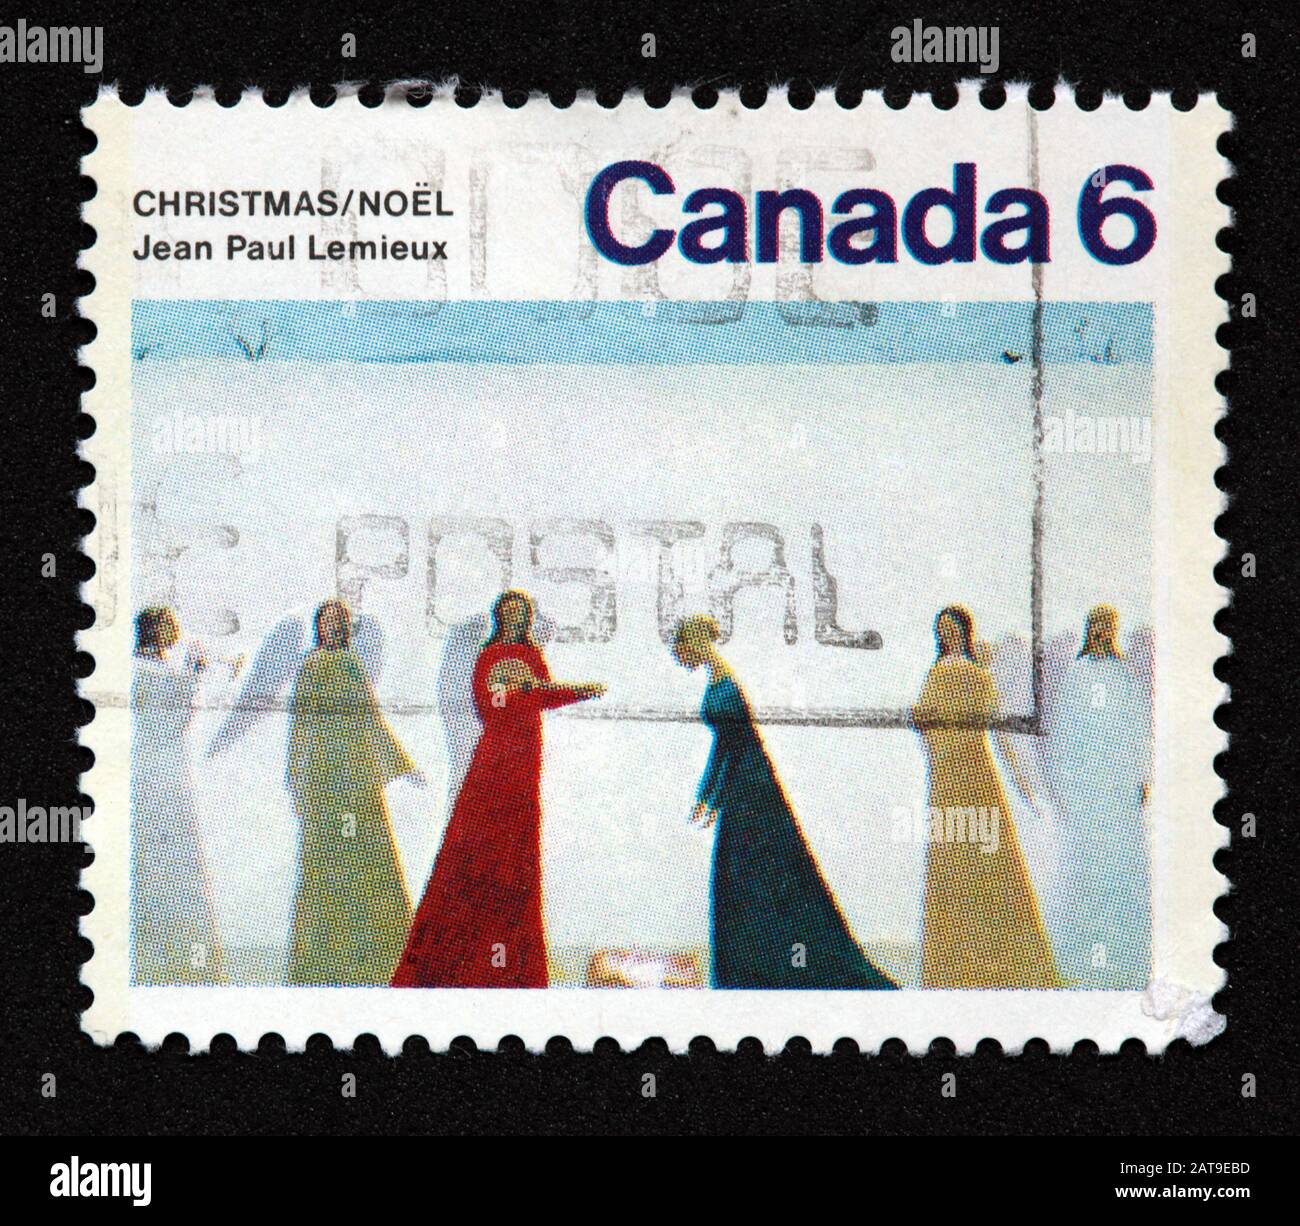 Timbro canadese, Canada Stamp, Canada Post, usato Stamp, Jean Paul Lemieux, angeli , 6 dollari, Natale , Noel, Jean Paul Lemieux , angeli, 6c, 6cent Foto Stock